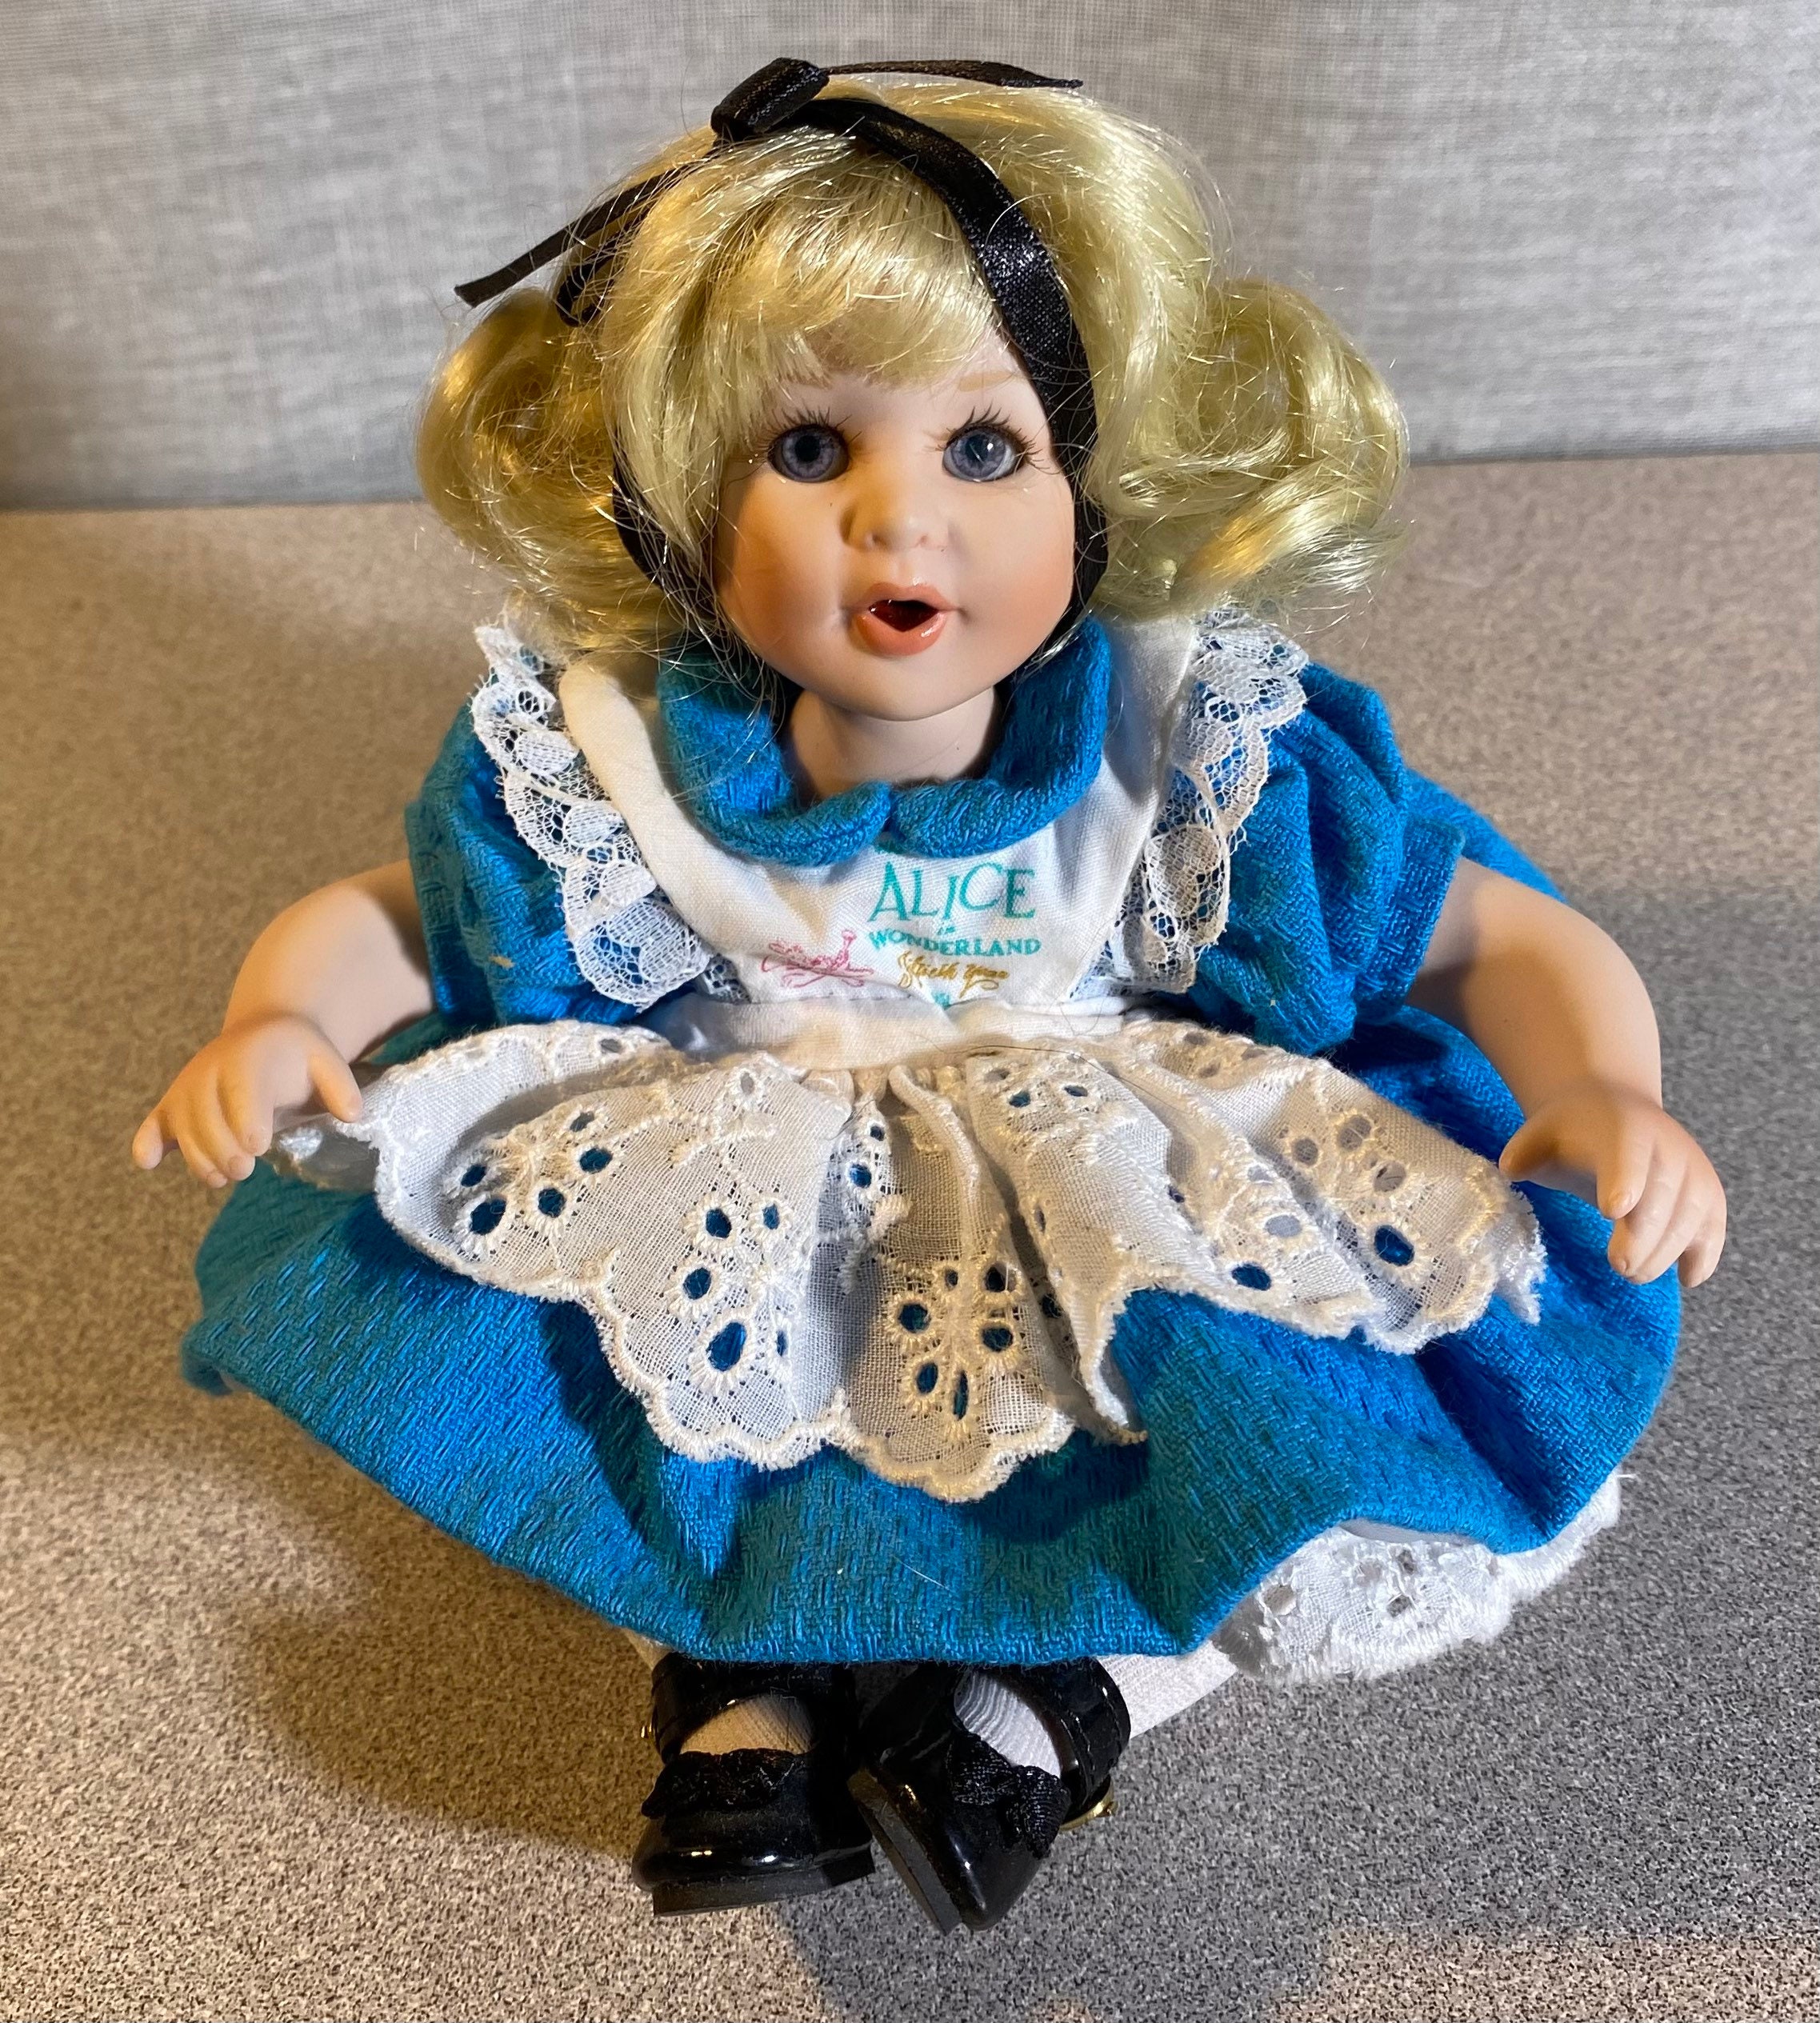 Barbie Alice in Wonderland Doll - Entertainment Earth